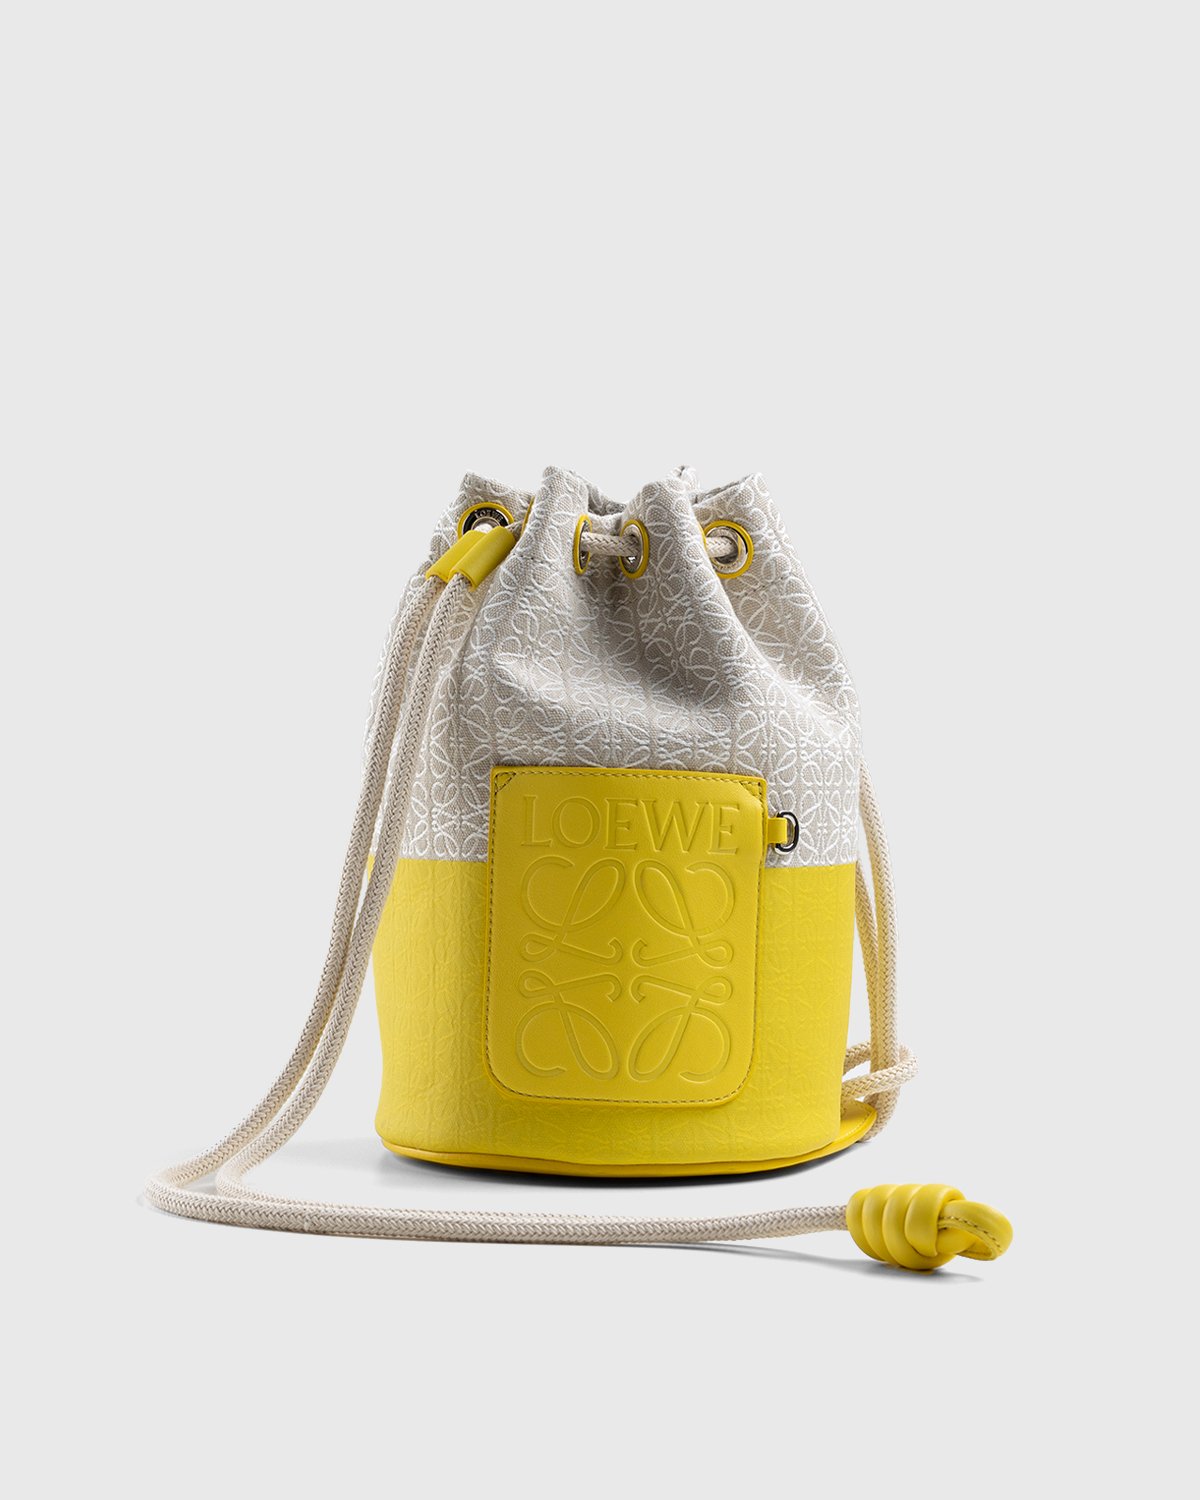 Loewe - Paula's Ibiza Small Sailor Bag Ecru/Lemon - Accessories - Yellow - Image 1